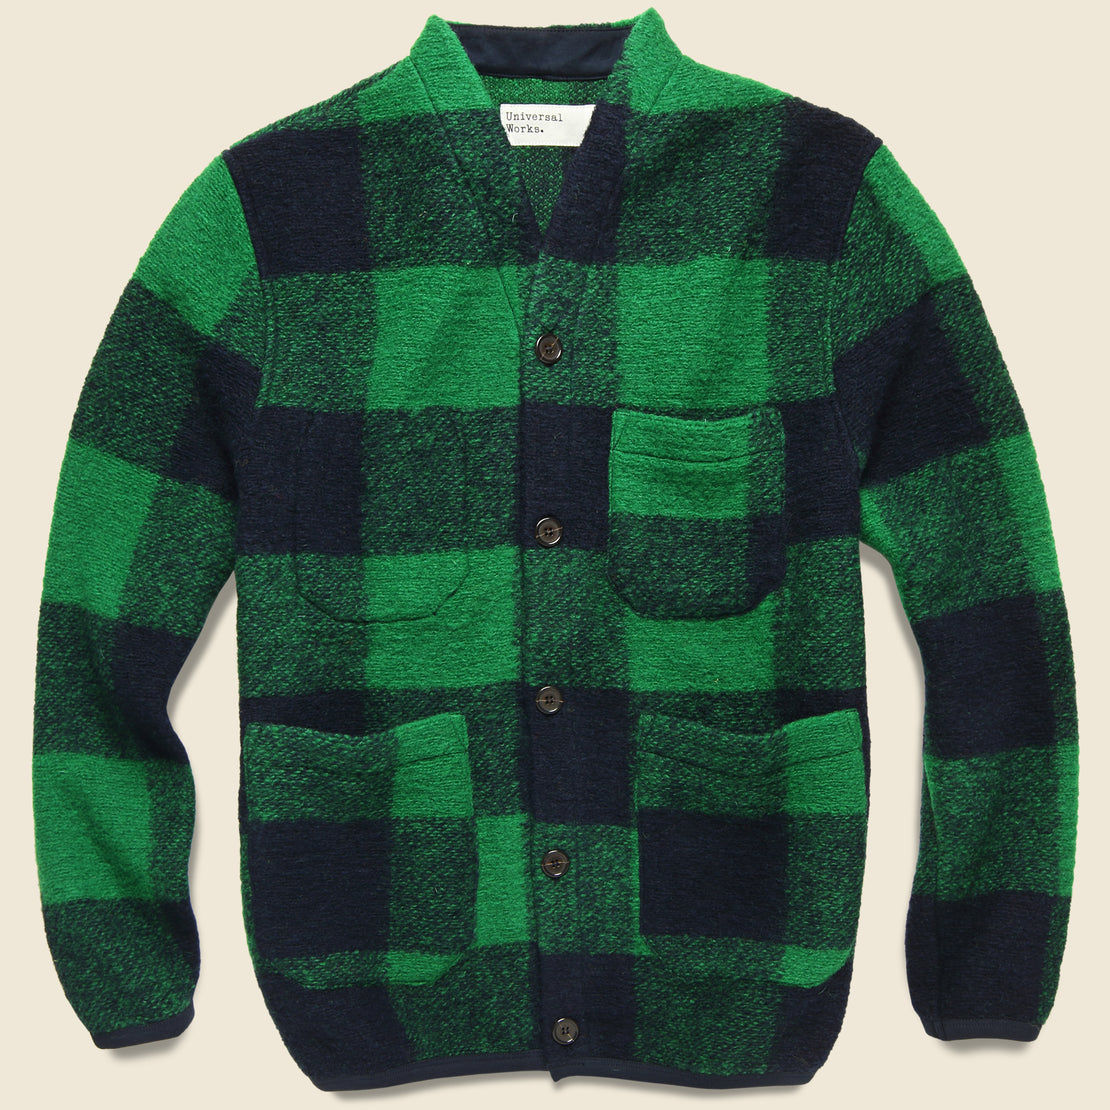 Universal Works Wool Fleece Cardigan - Green Check